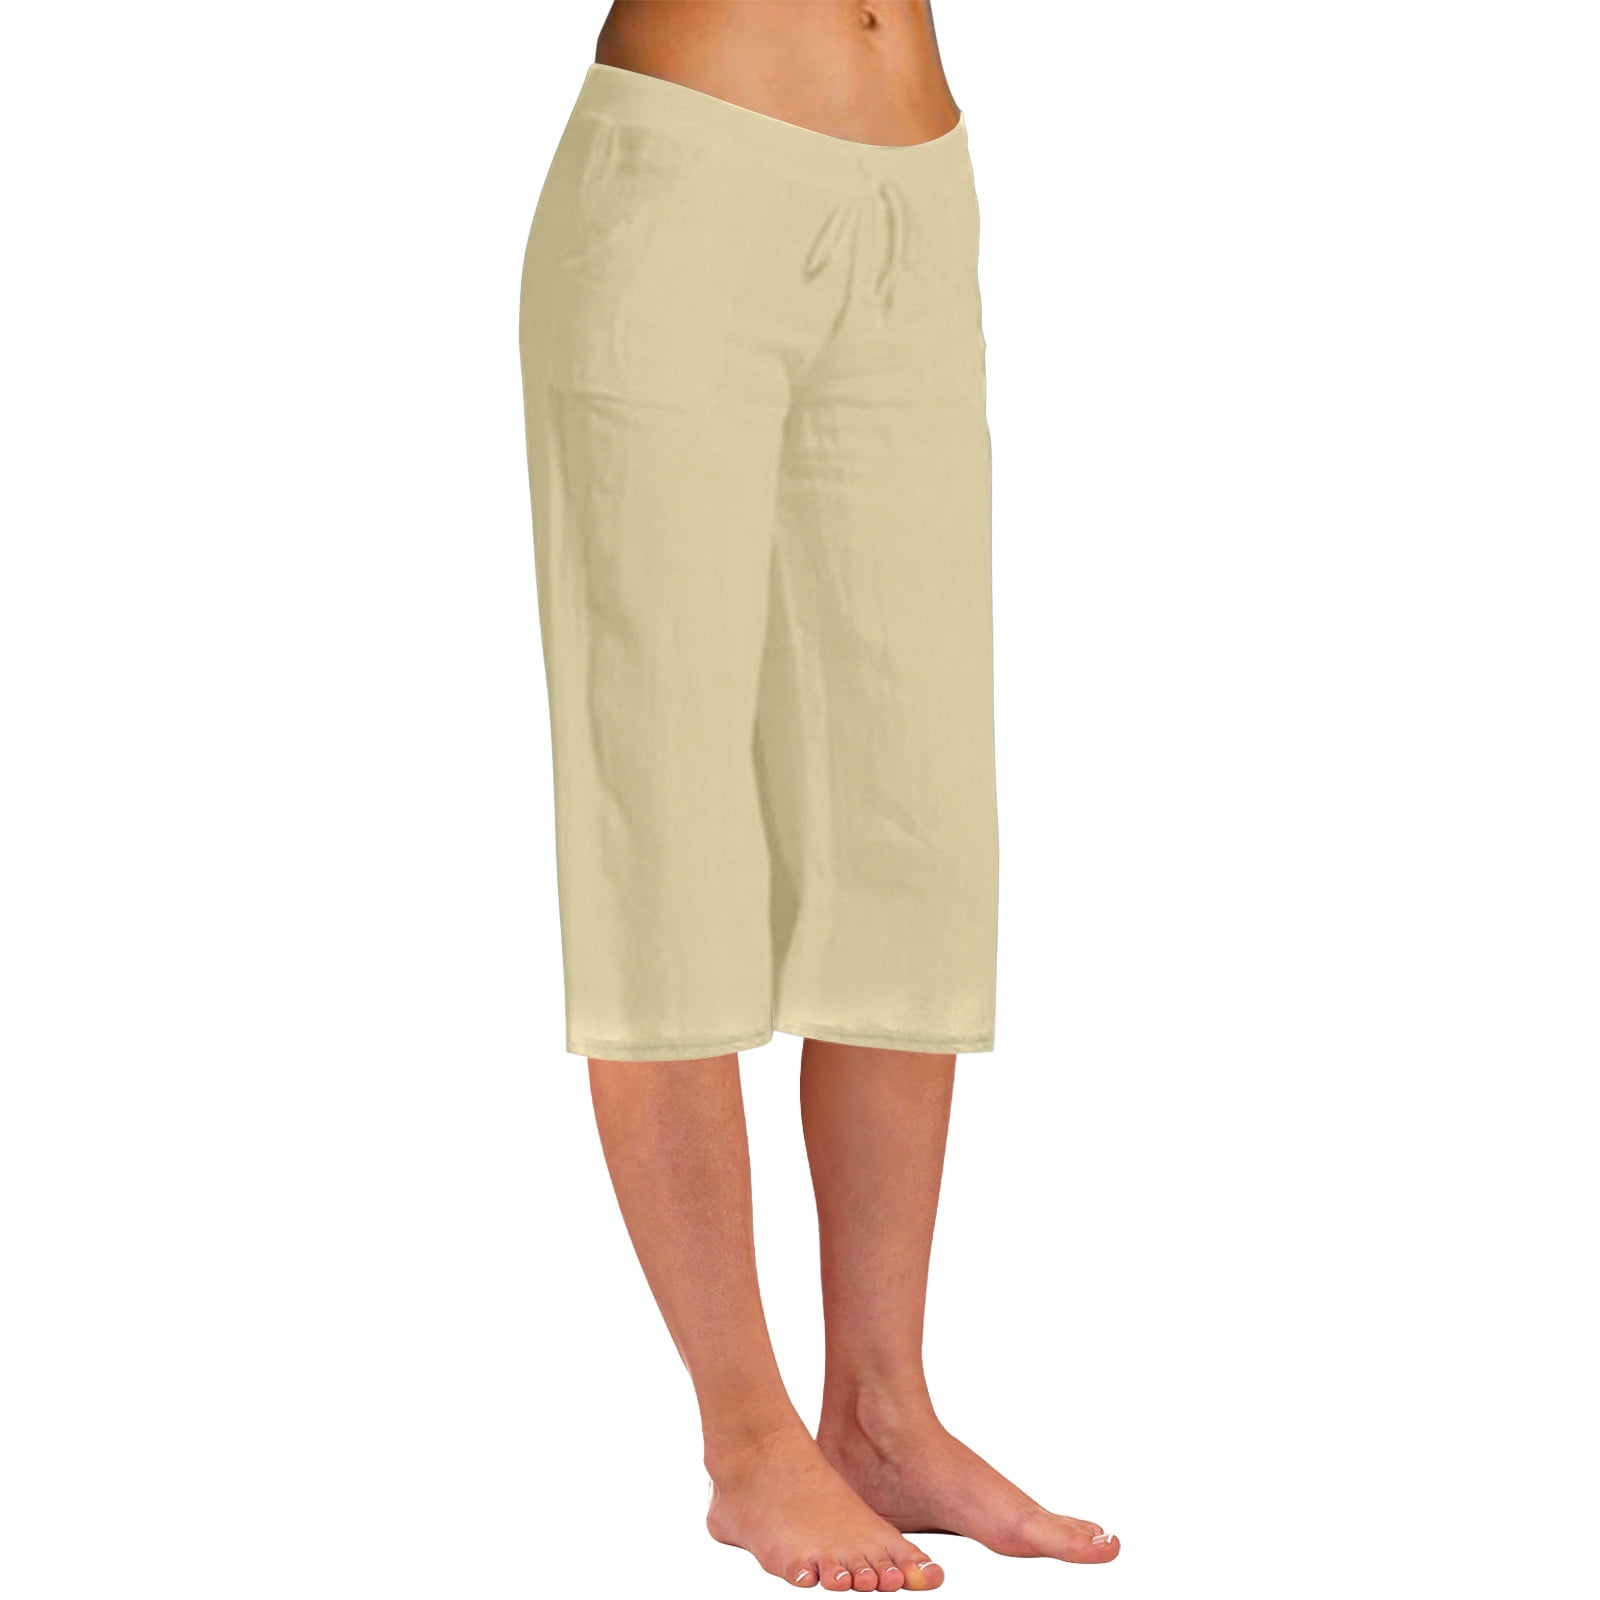 Martmory Women's Casual Cotton Linen Long Pants Elastic Waist